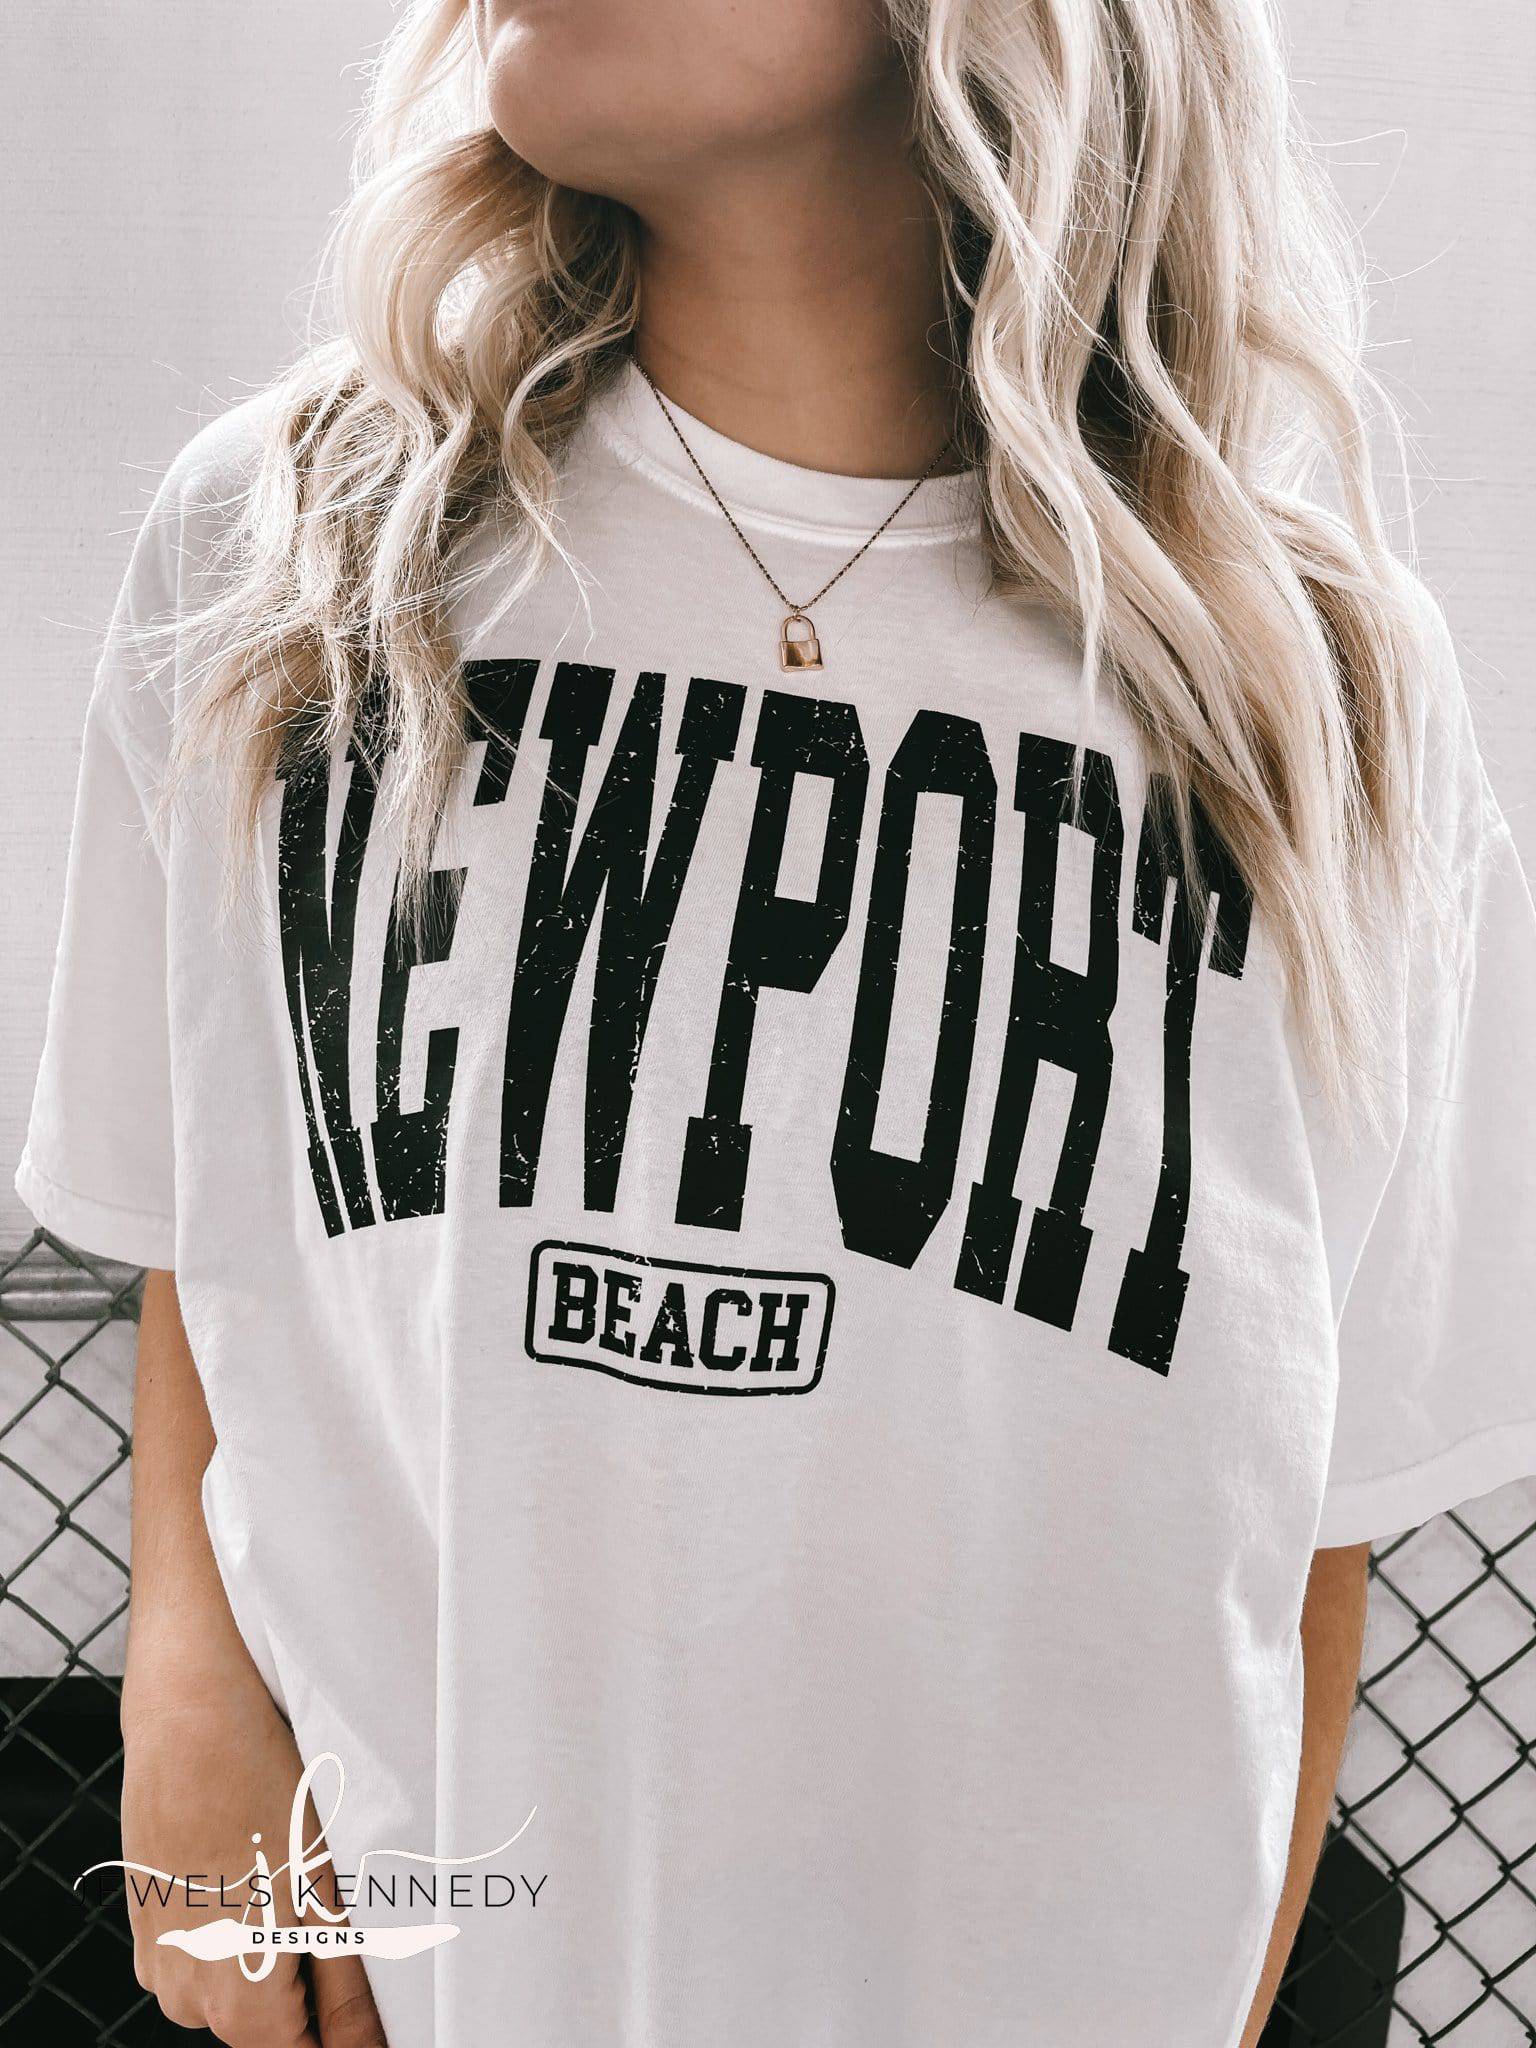 Newport Beach Comfort Colors Shirt - JEWELS KENNEDY DESIGNS